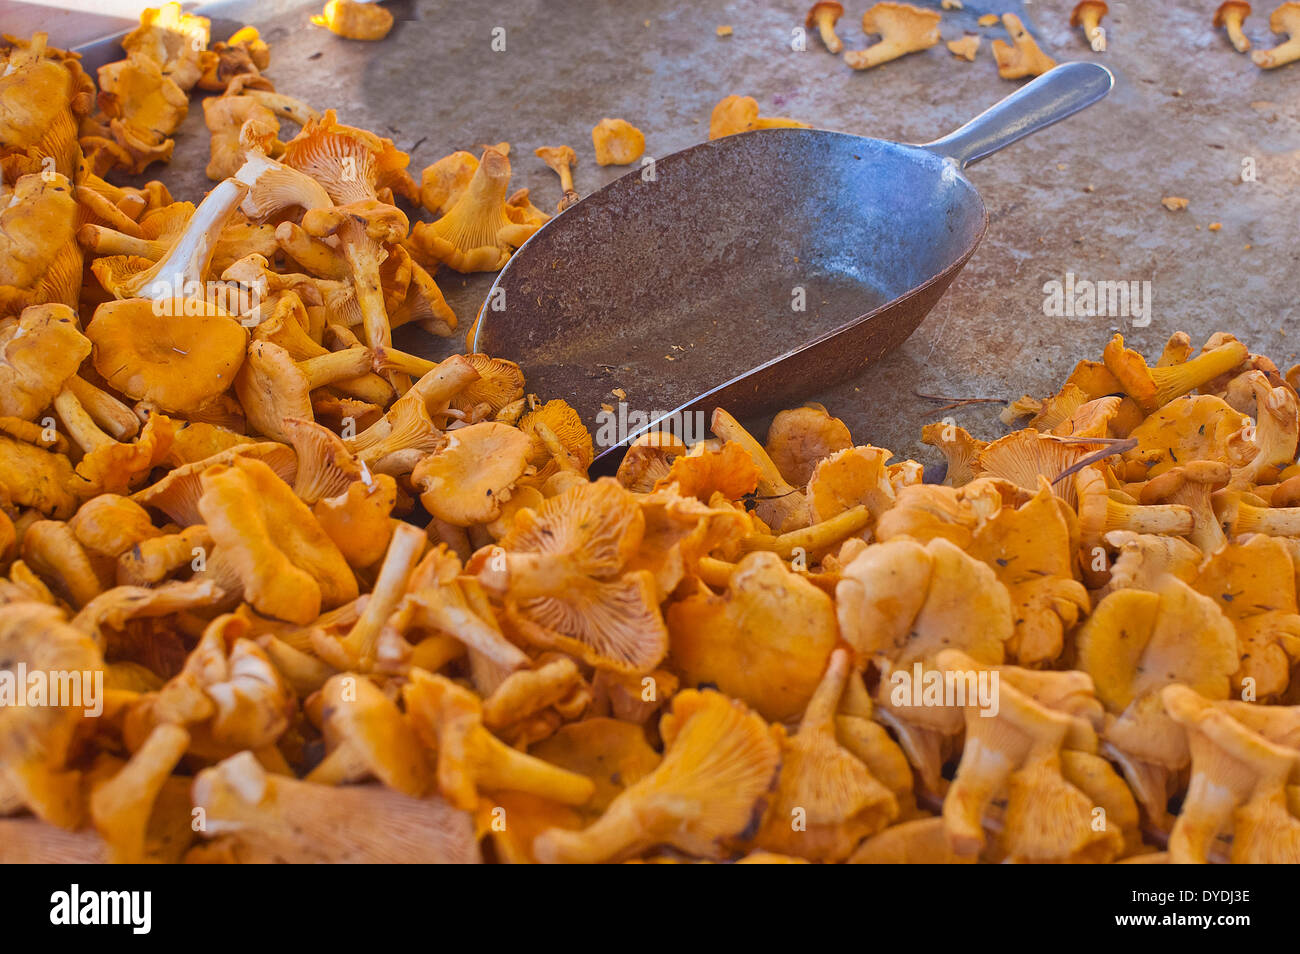 Austria, Salzburg, market, mushrooms, eating, Food, chanterelles, Stock Photo